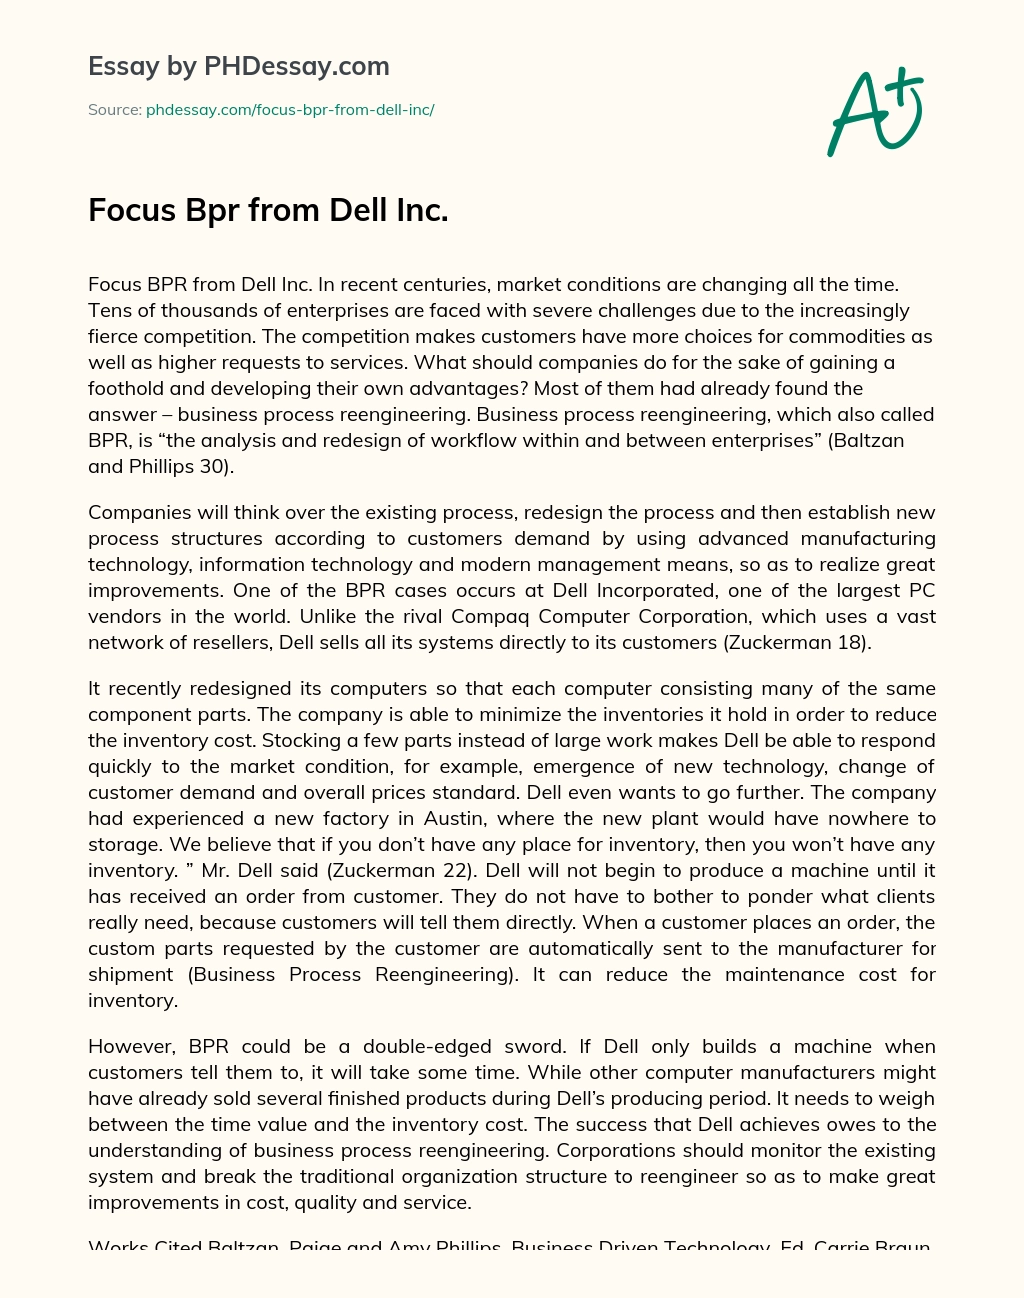 Focus Bpr from Dell Inc. essay